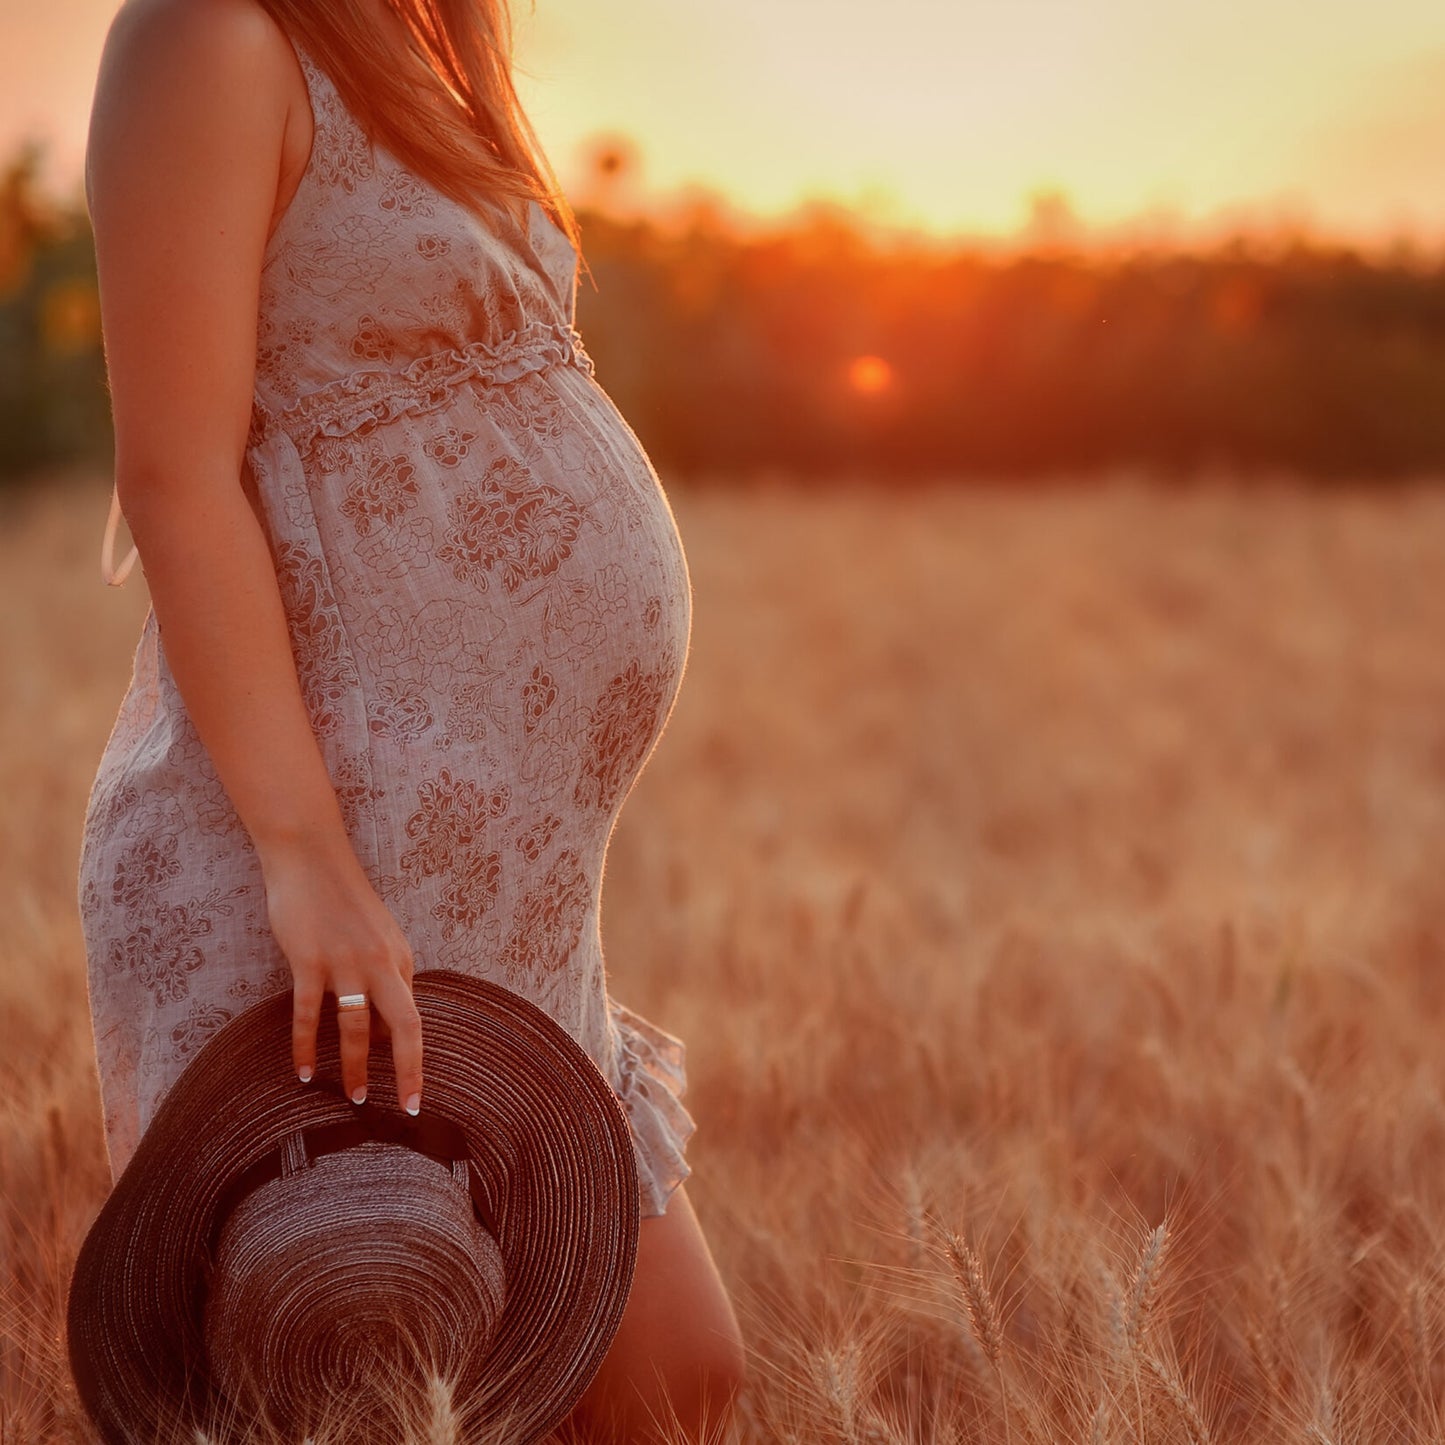 Pregnant Woman in Field